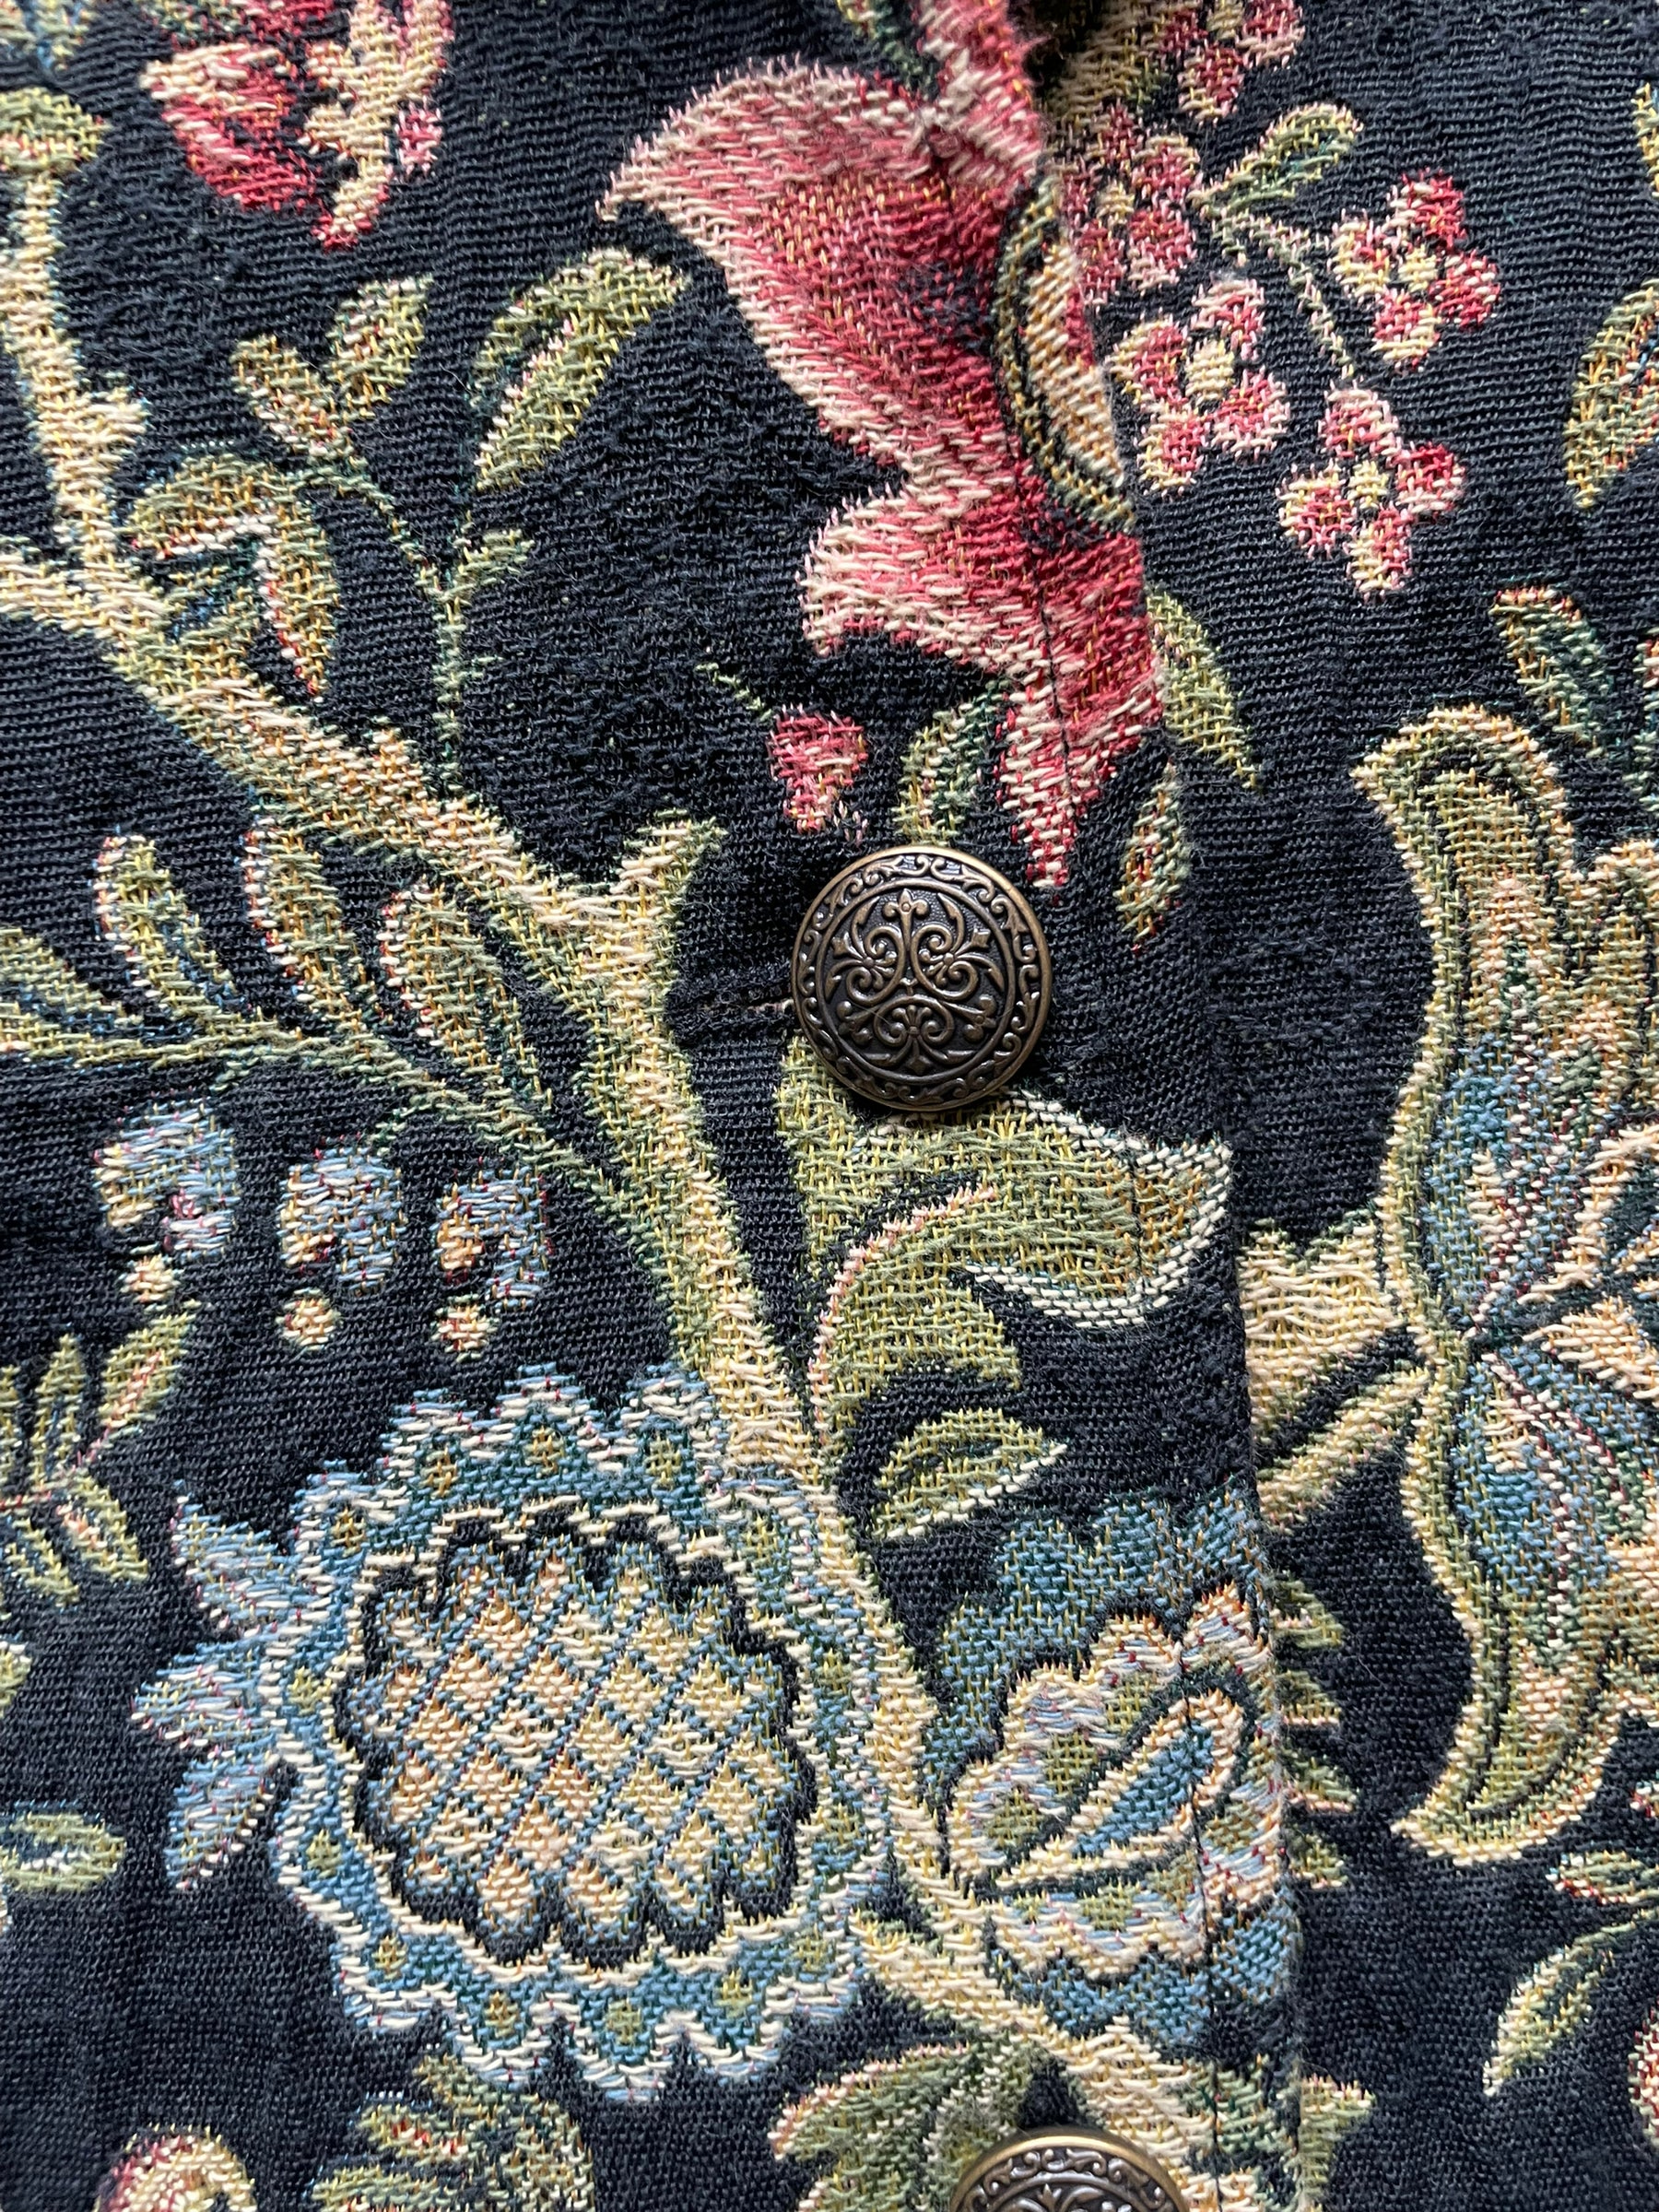 Button detail of Vintage 90s Ladies Tapestry Jacket | Seattle True Vintage | Barn Owl Ladies Clothing